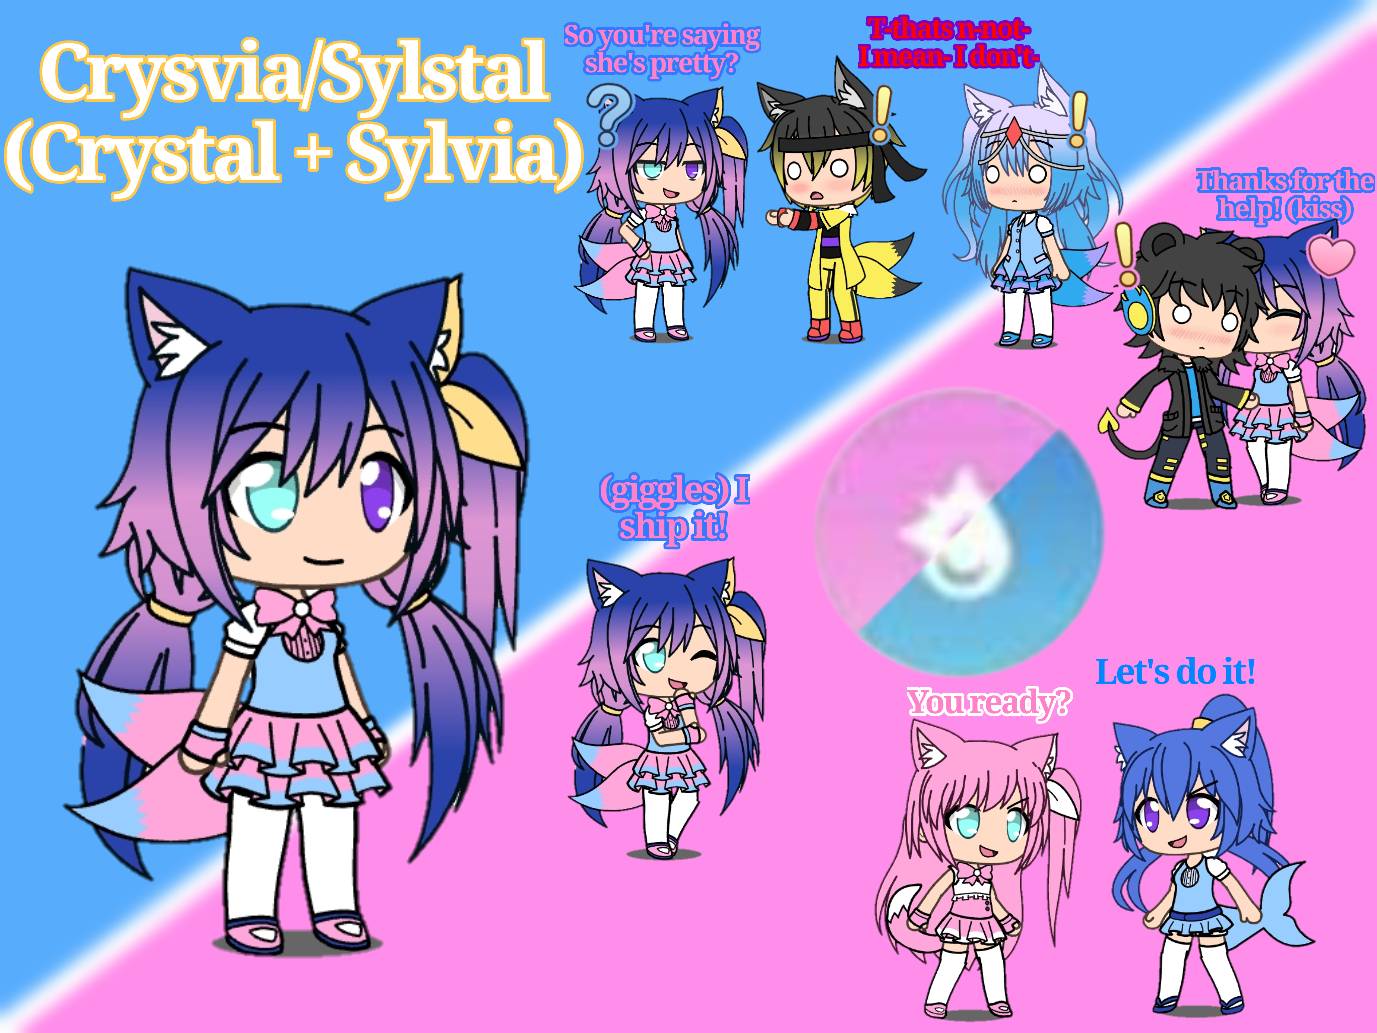 Eeveelution Squad Fusion: Crysvia/Sylstal by MegaIceManX on DeviantArt